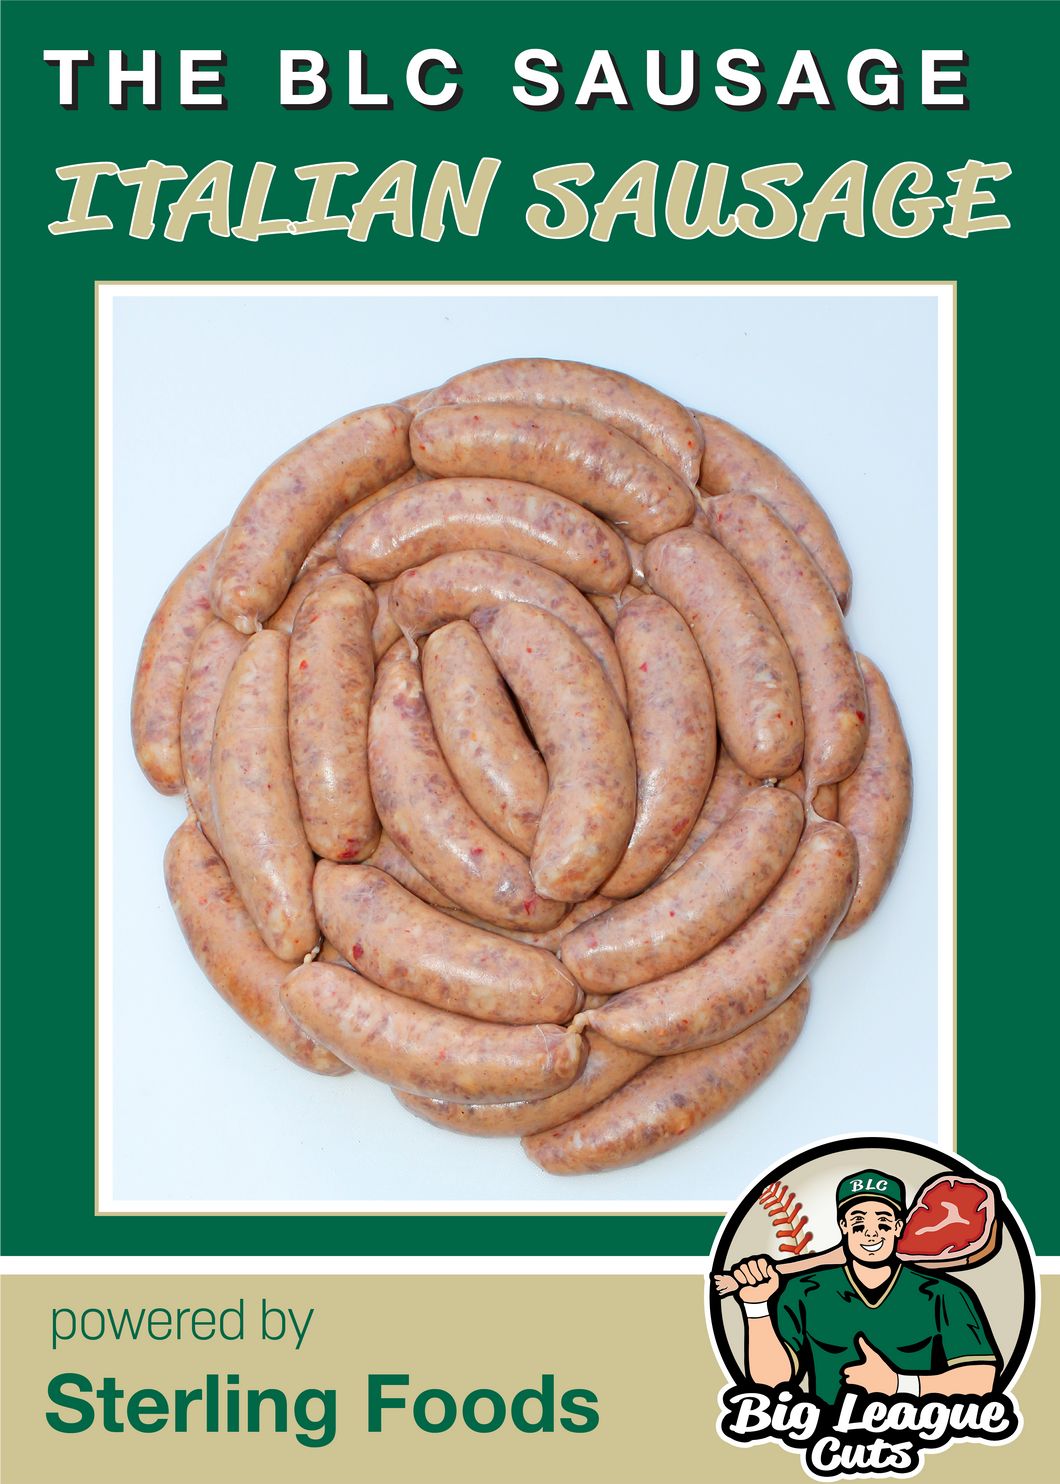 The BLC Sausage (16) 4 oz. links